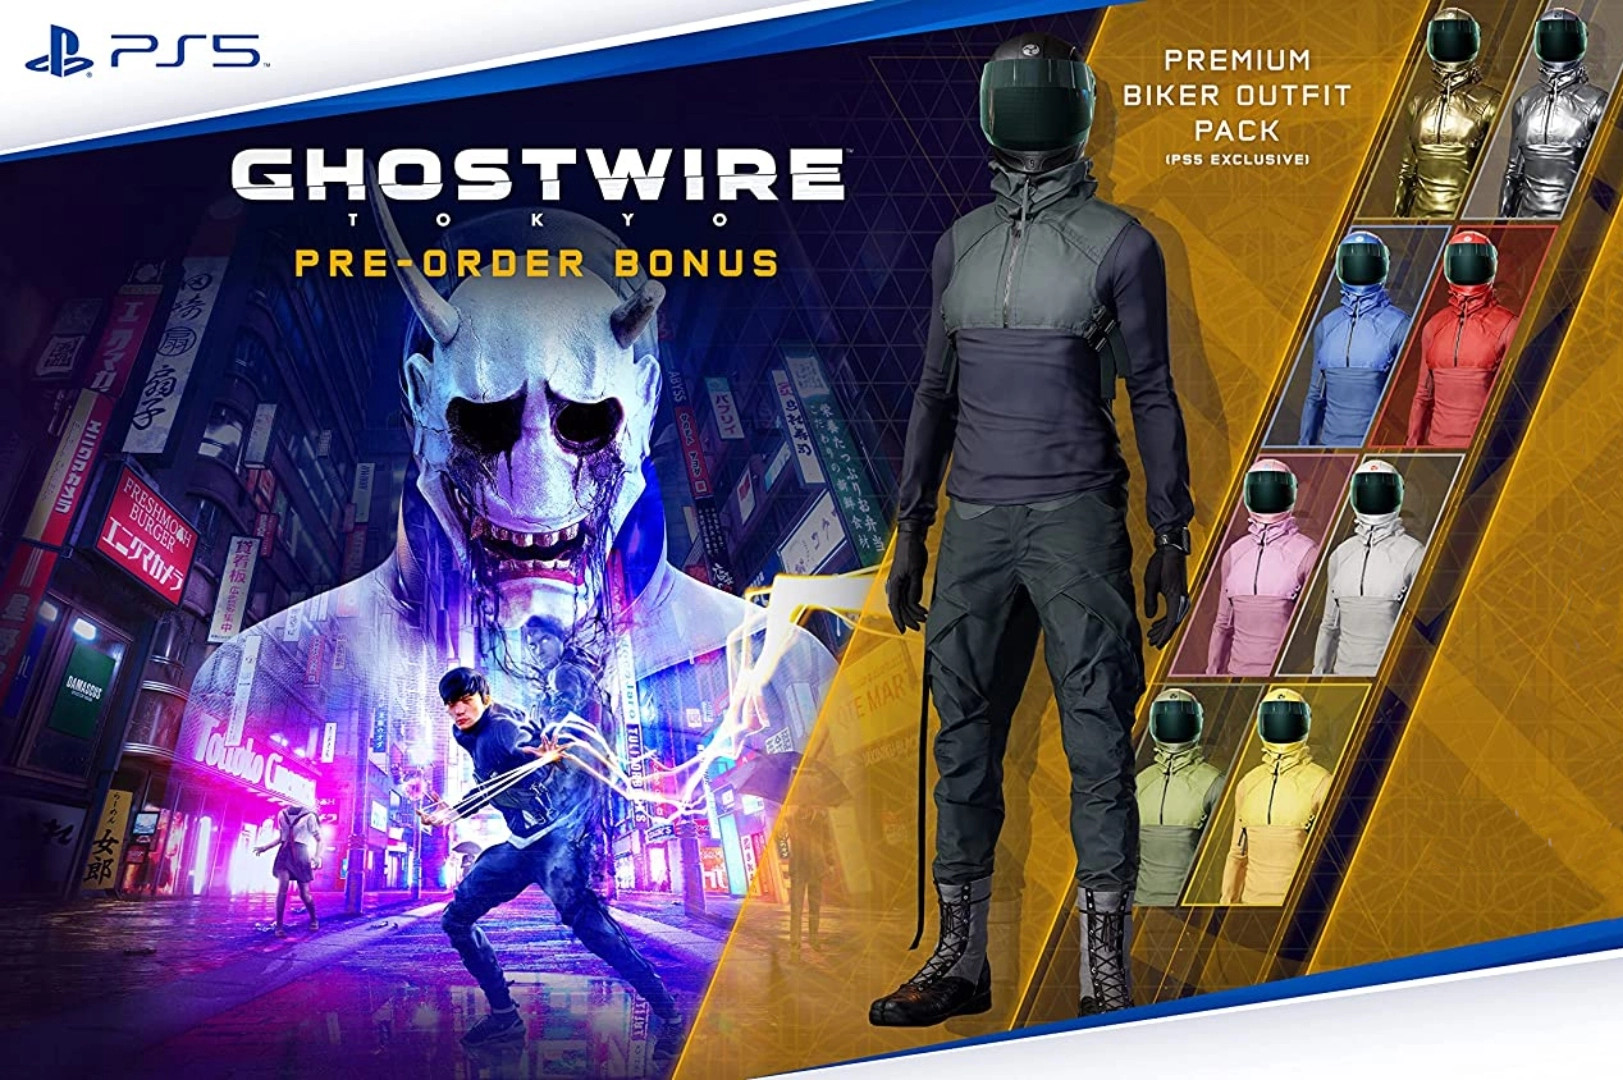 GhostWire: Tokyo - Premium Biker Outfit Pack DLC EU PS5 CD Key 4.51 $